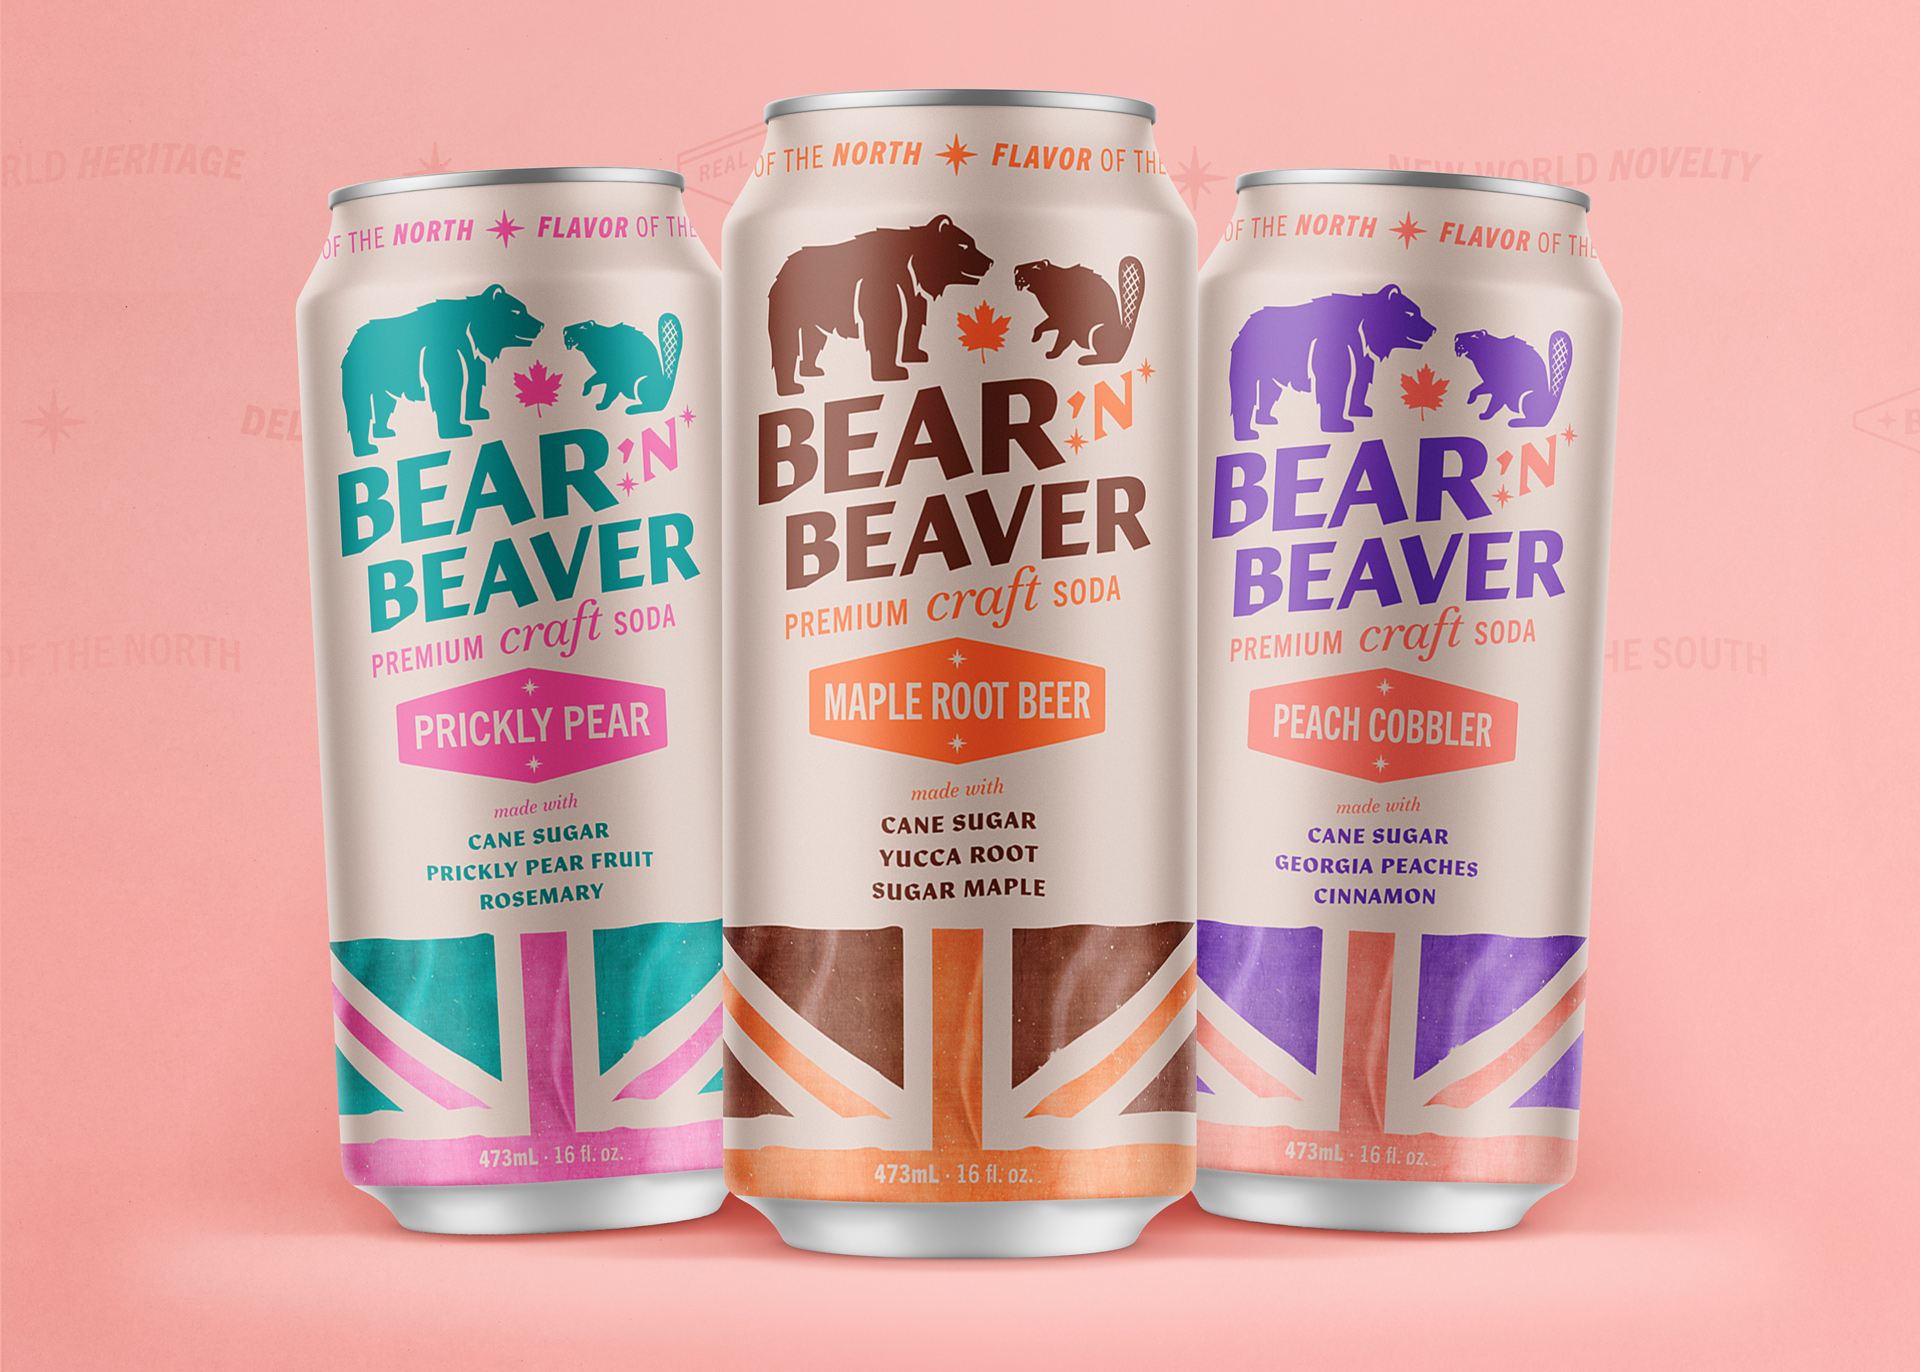 Bear ’n Beaver—Deliciously Distinctive Craft Soda